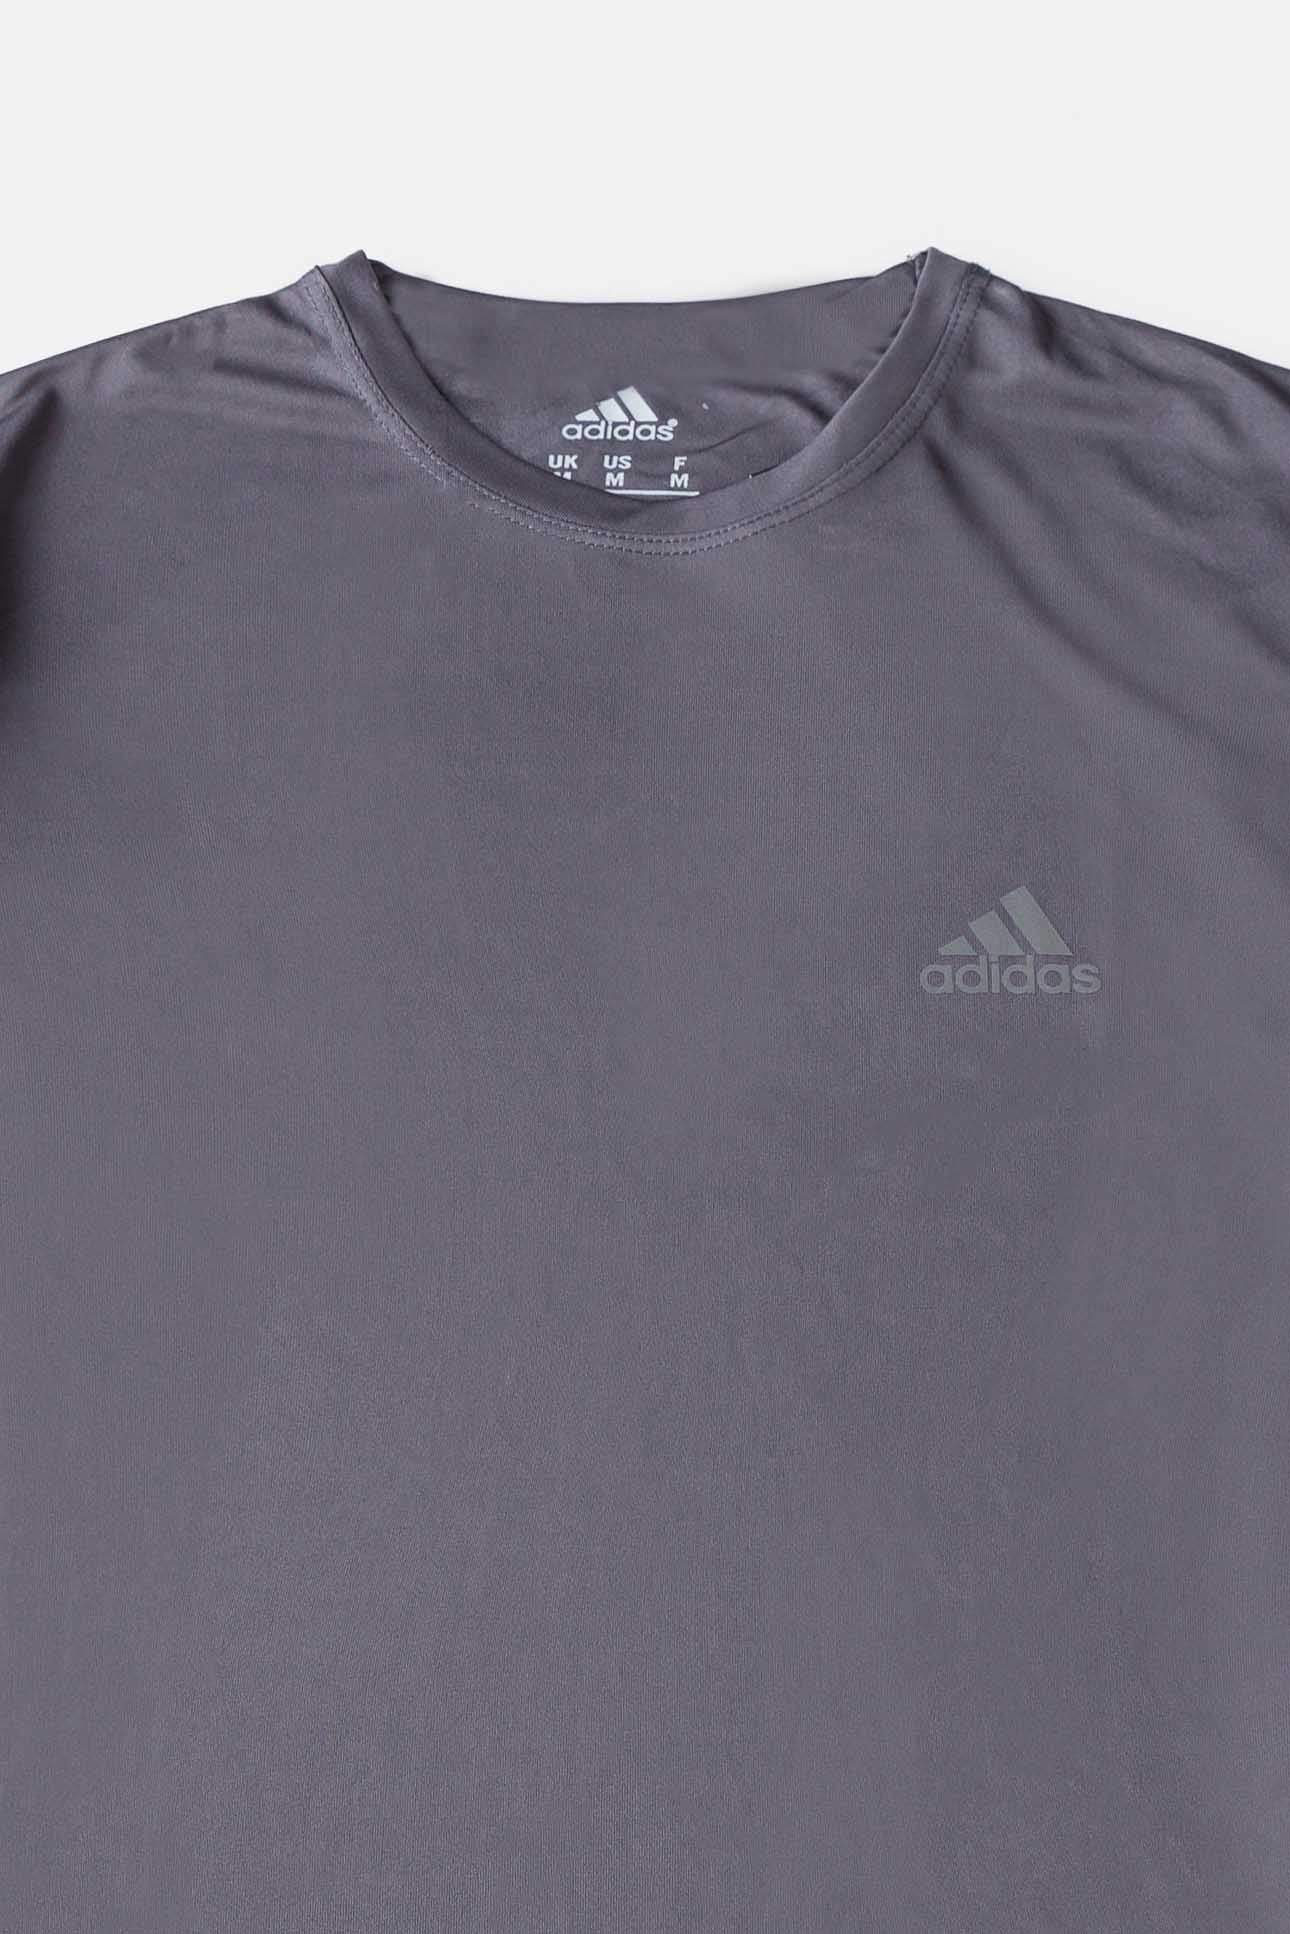 Premium Quality Dri-FIT Adidas T Shirt Steel Gray